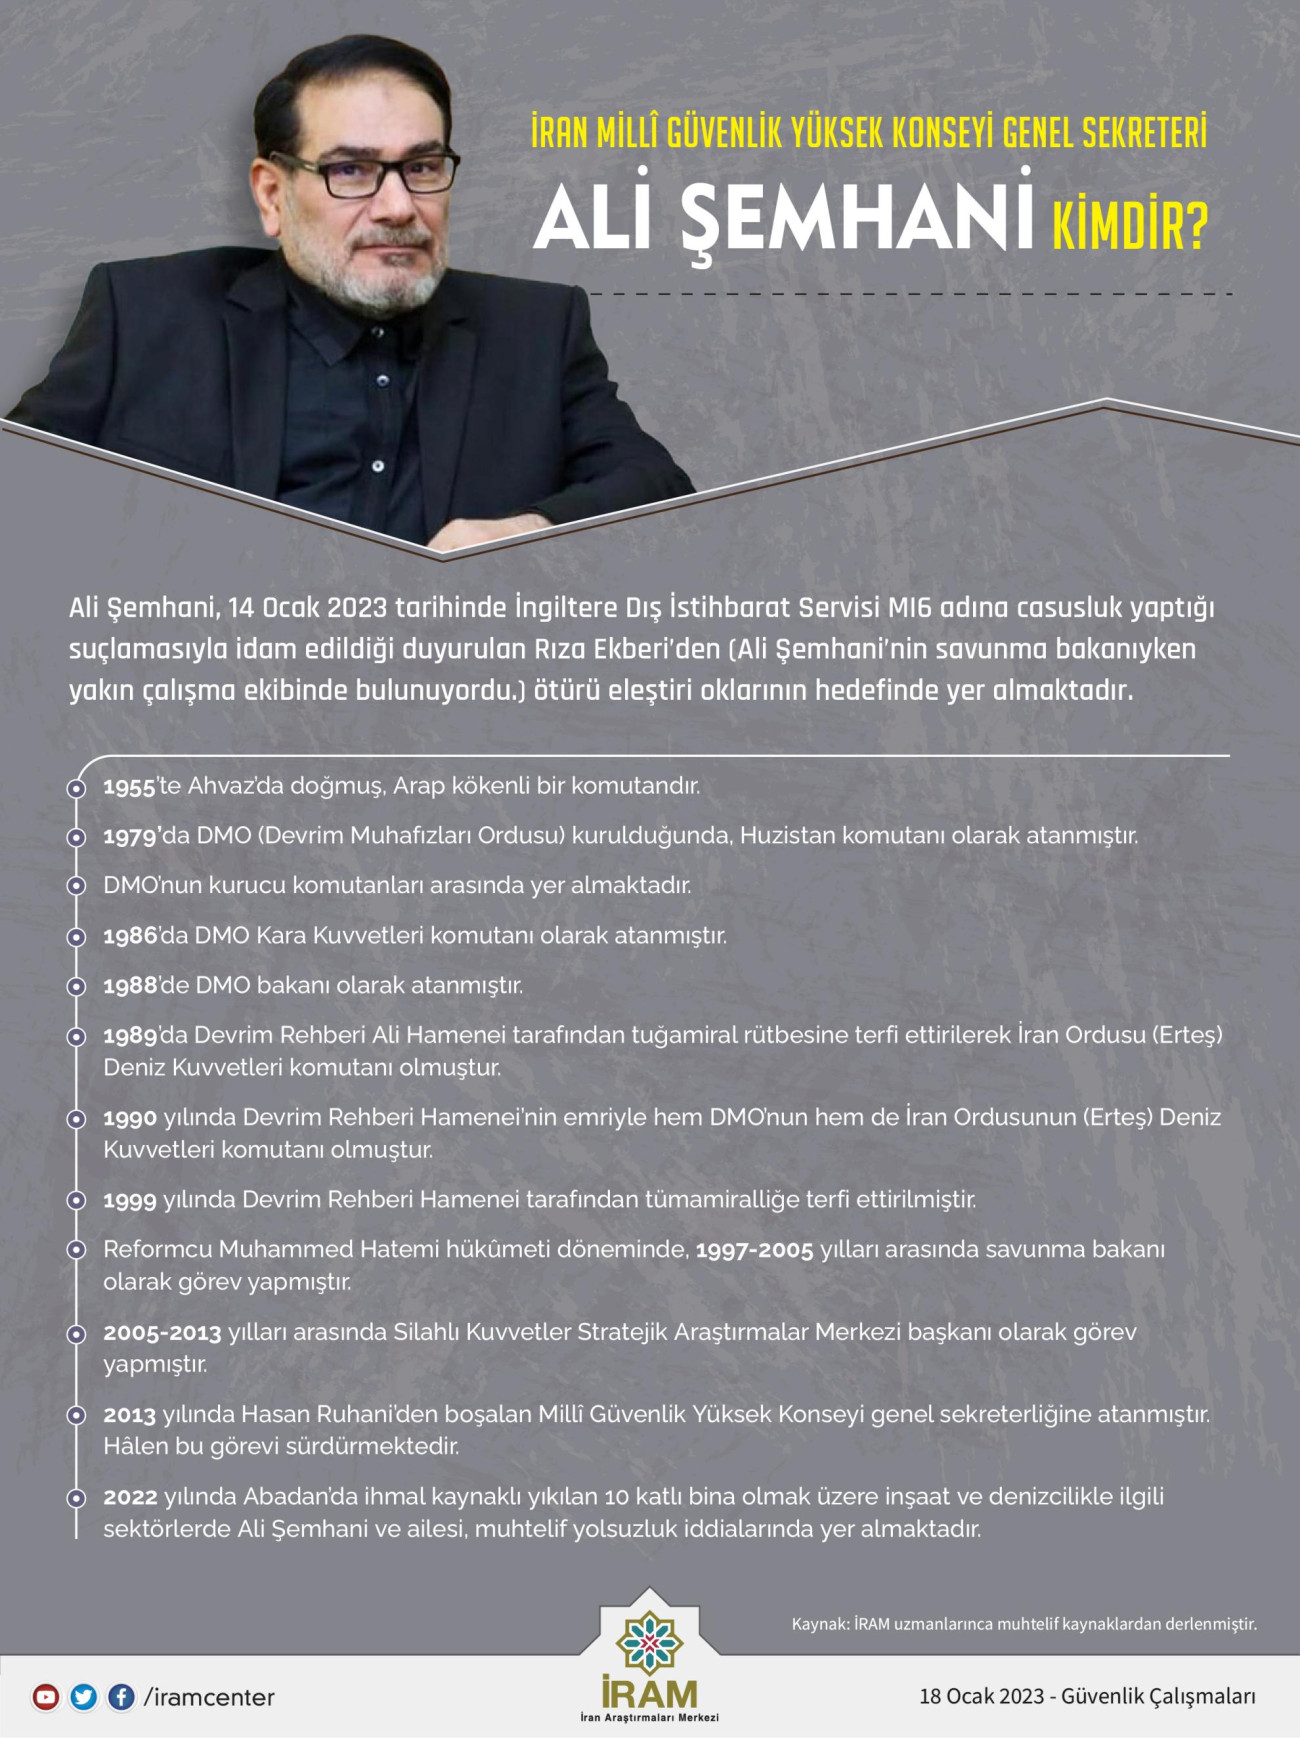 İran Millî Güvenlik Yüksek Konseyi Genel Sekreteri Ali Şemhani Kimdir?